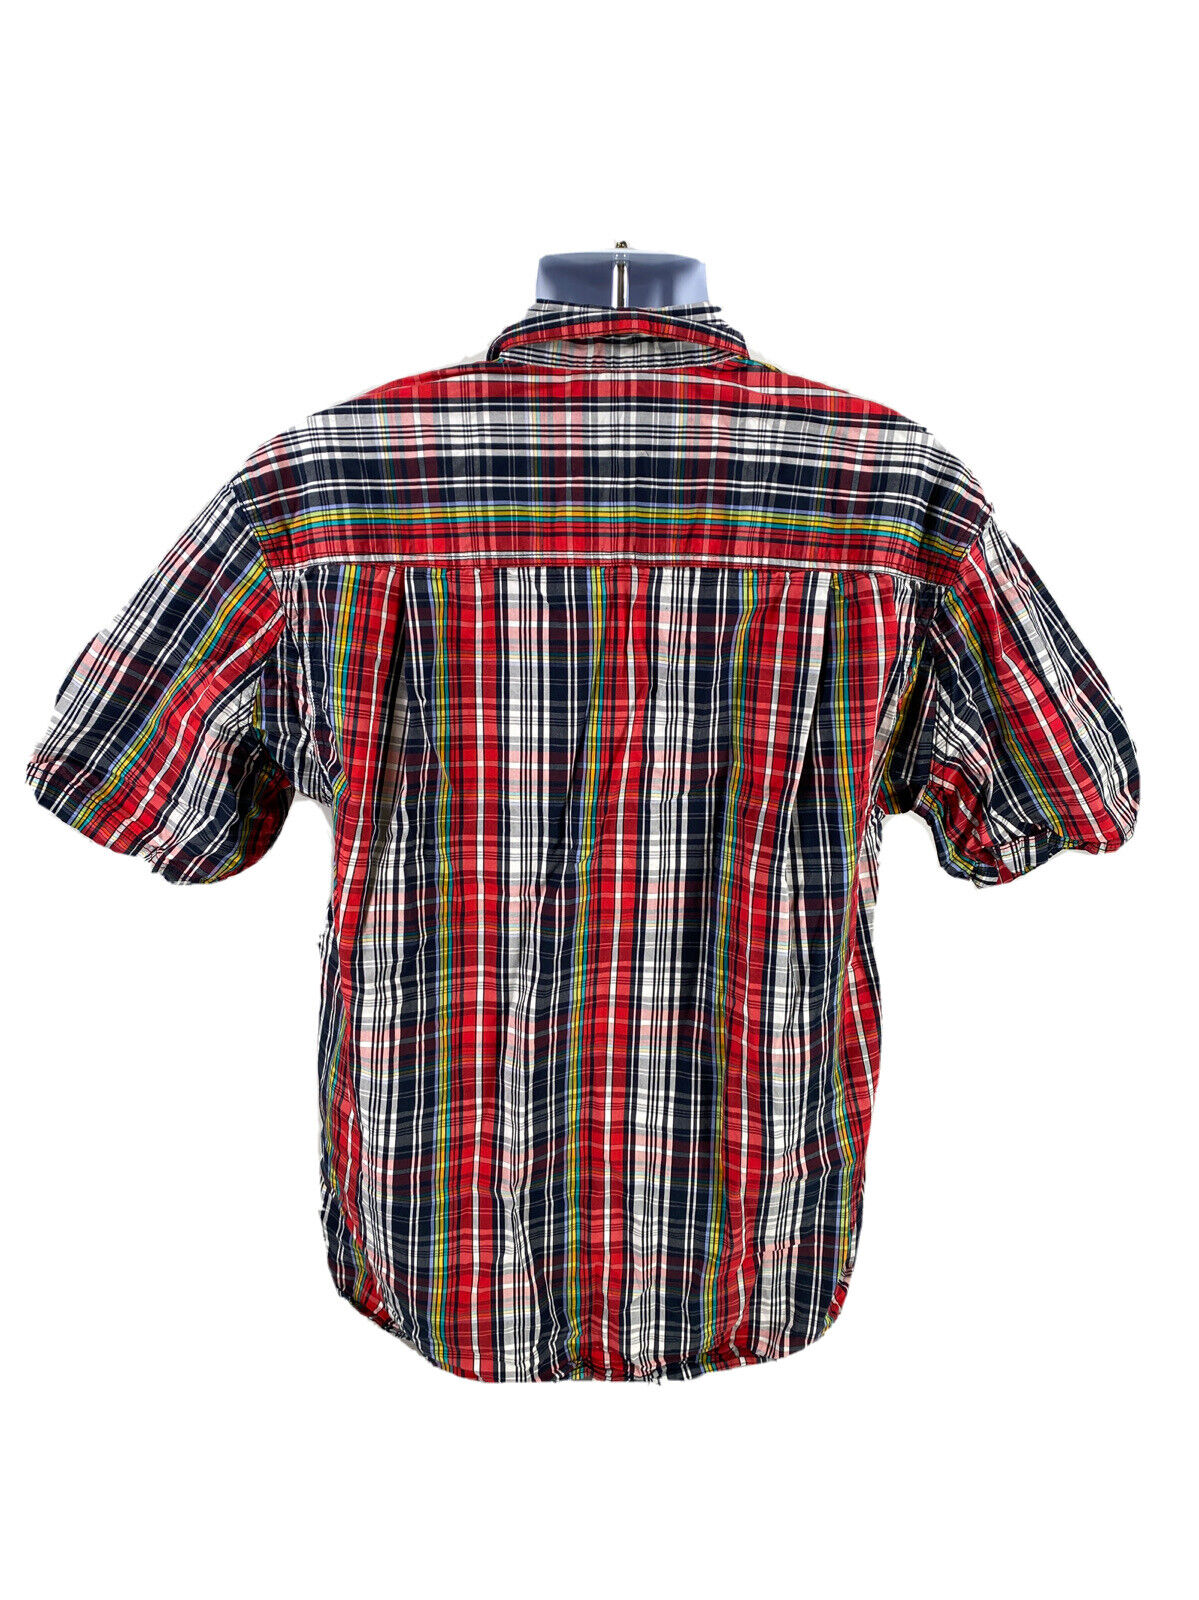 Duluth Trading Men's Blue/Red Short Sleeve Button Up Shirt - M Tall